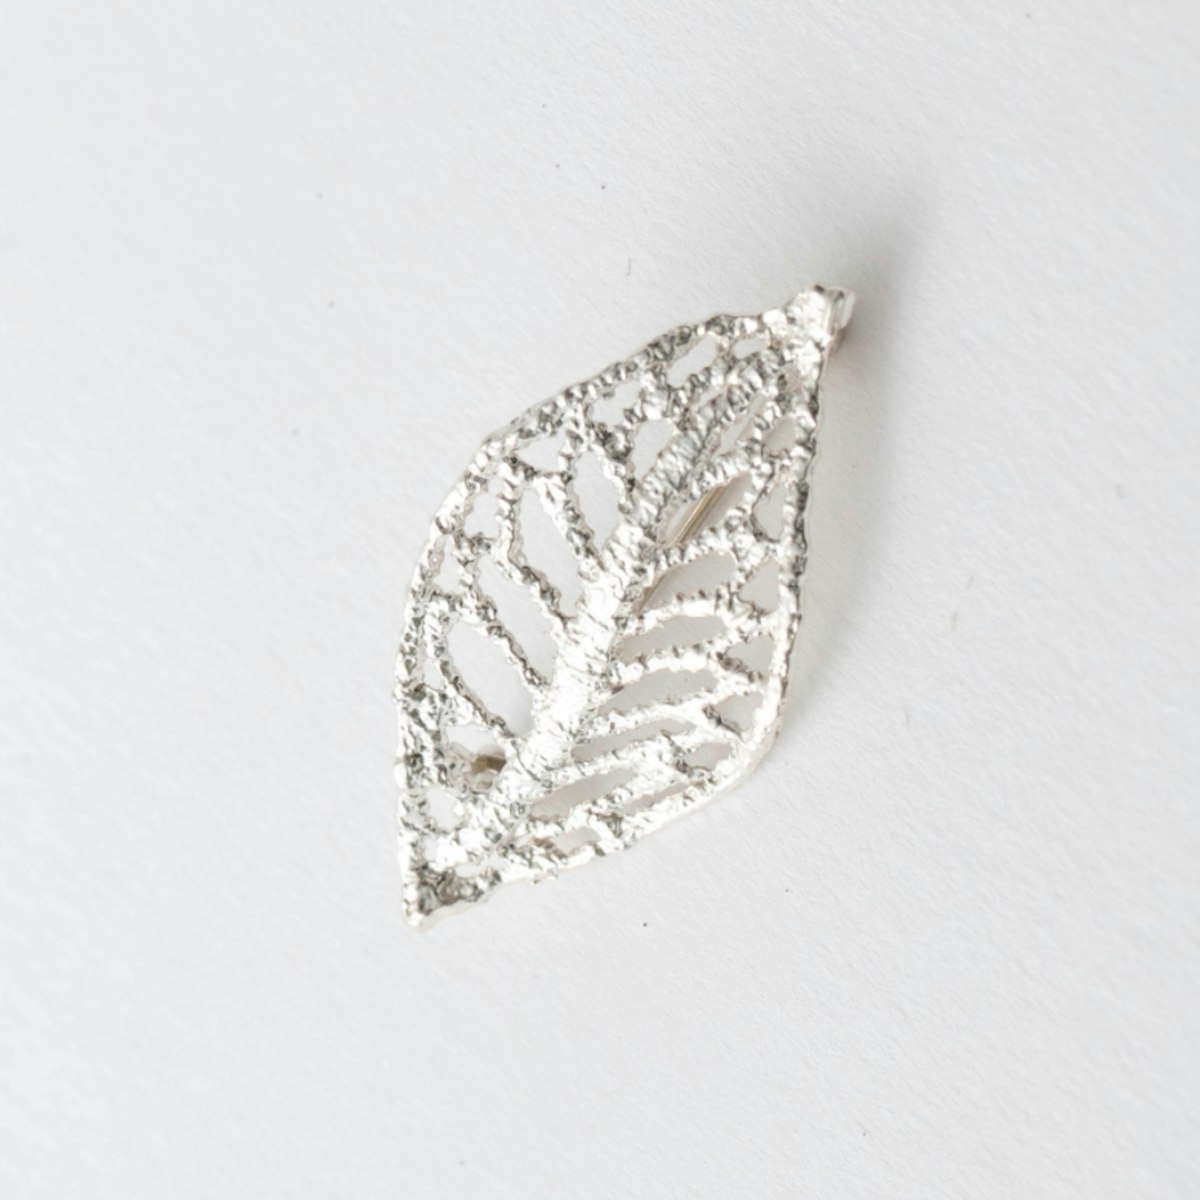 ichinose naomi/ブローチ leaf